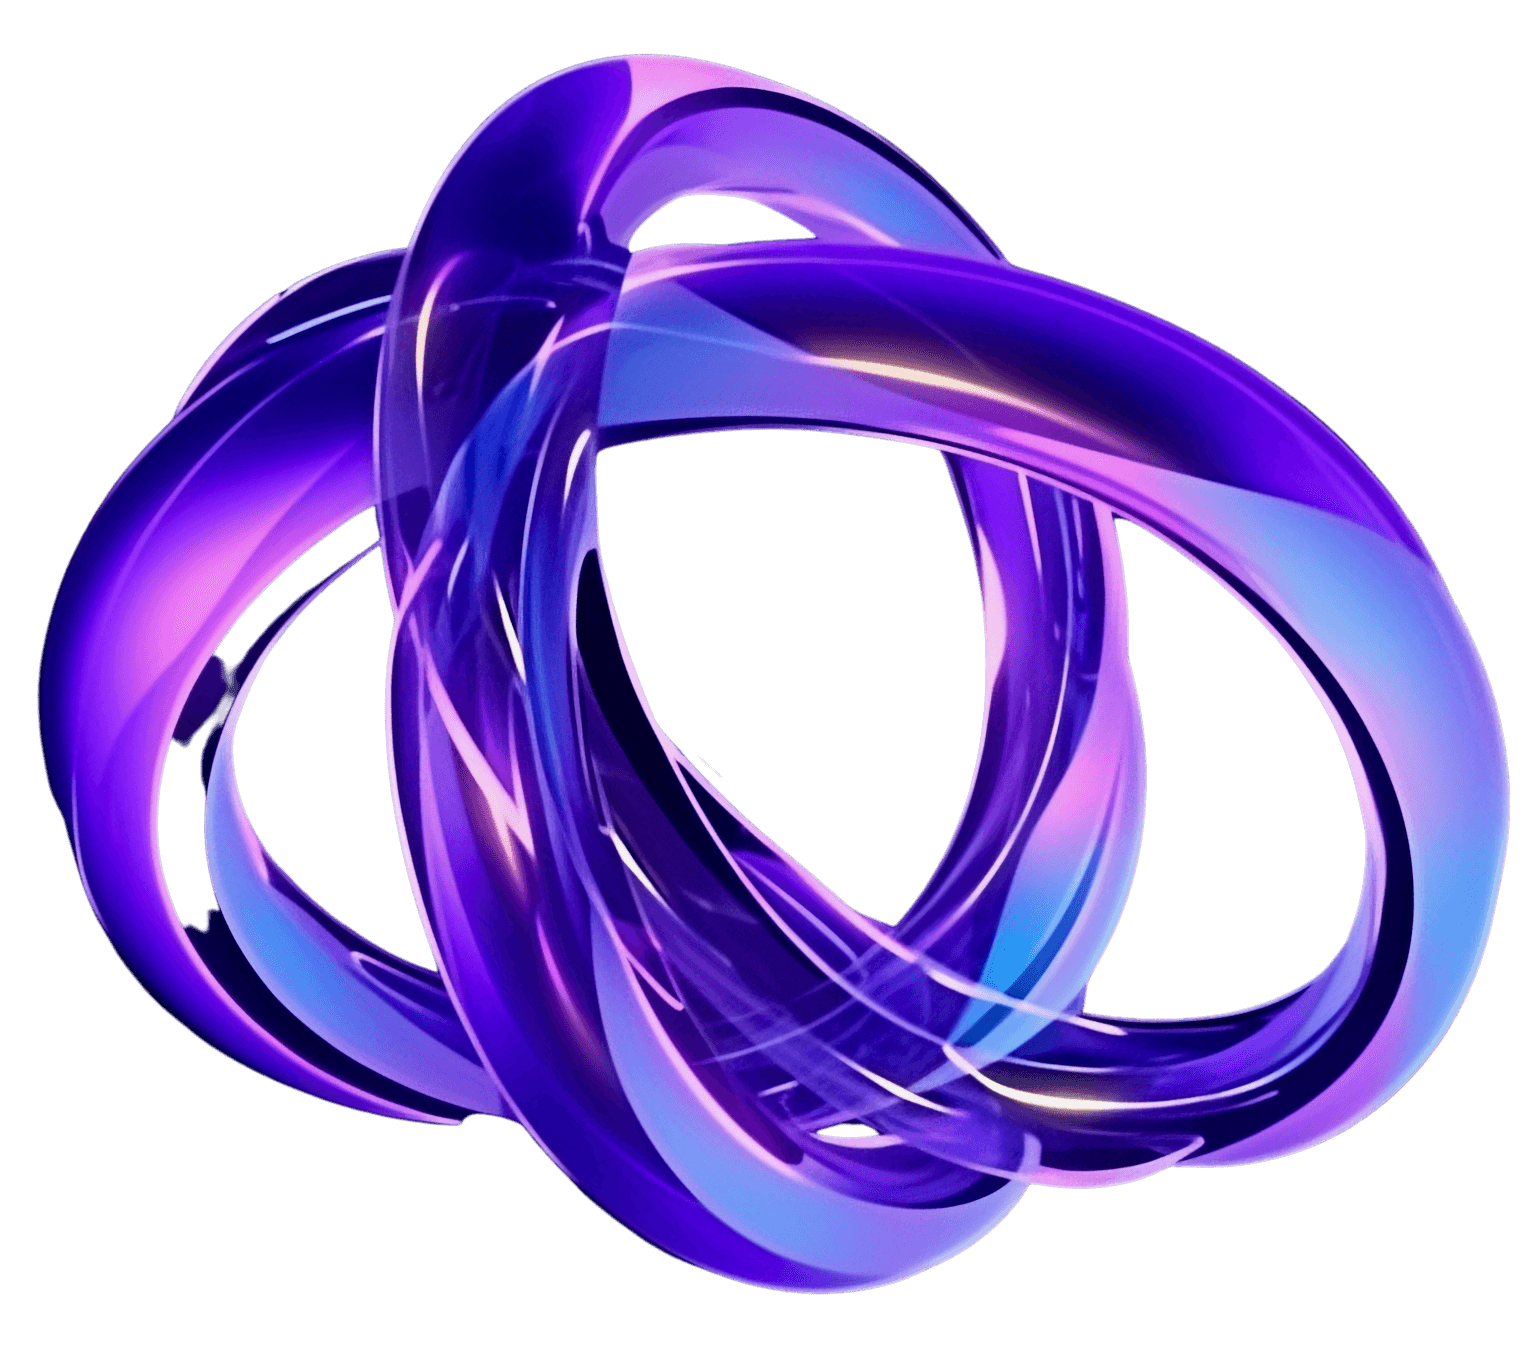 Circular swirl